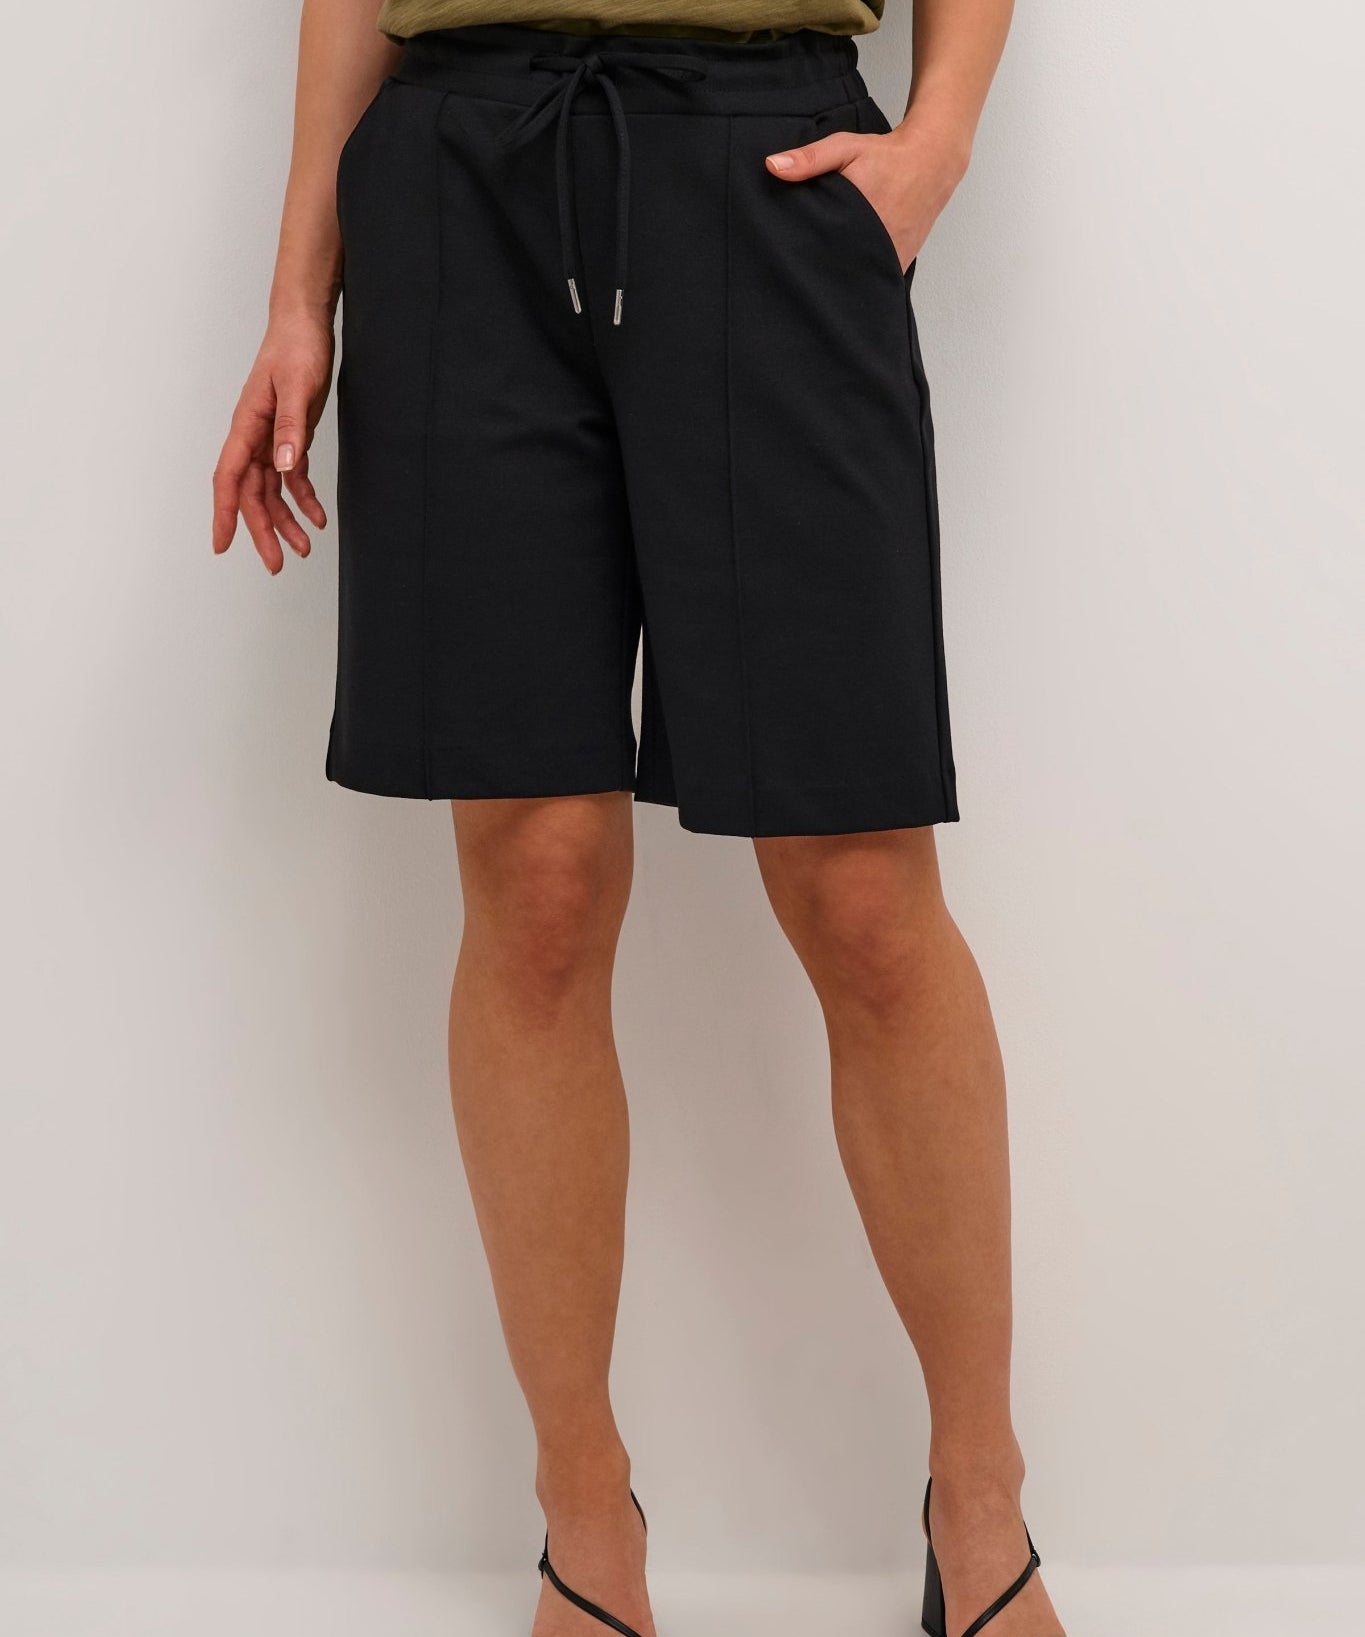 Eloise Shorts by Culture - black - Blue Sky Fashions & Lingerie